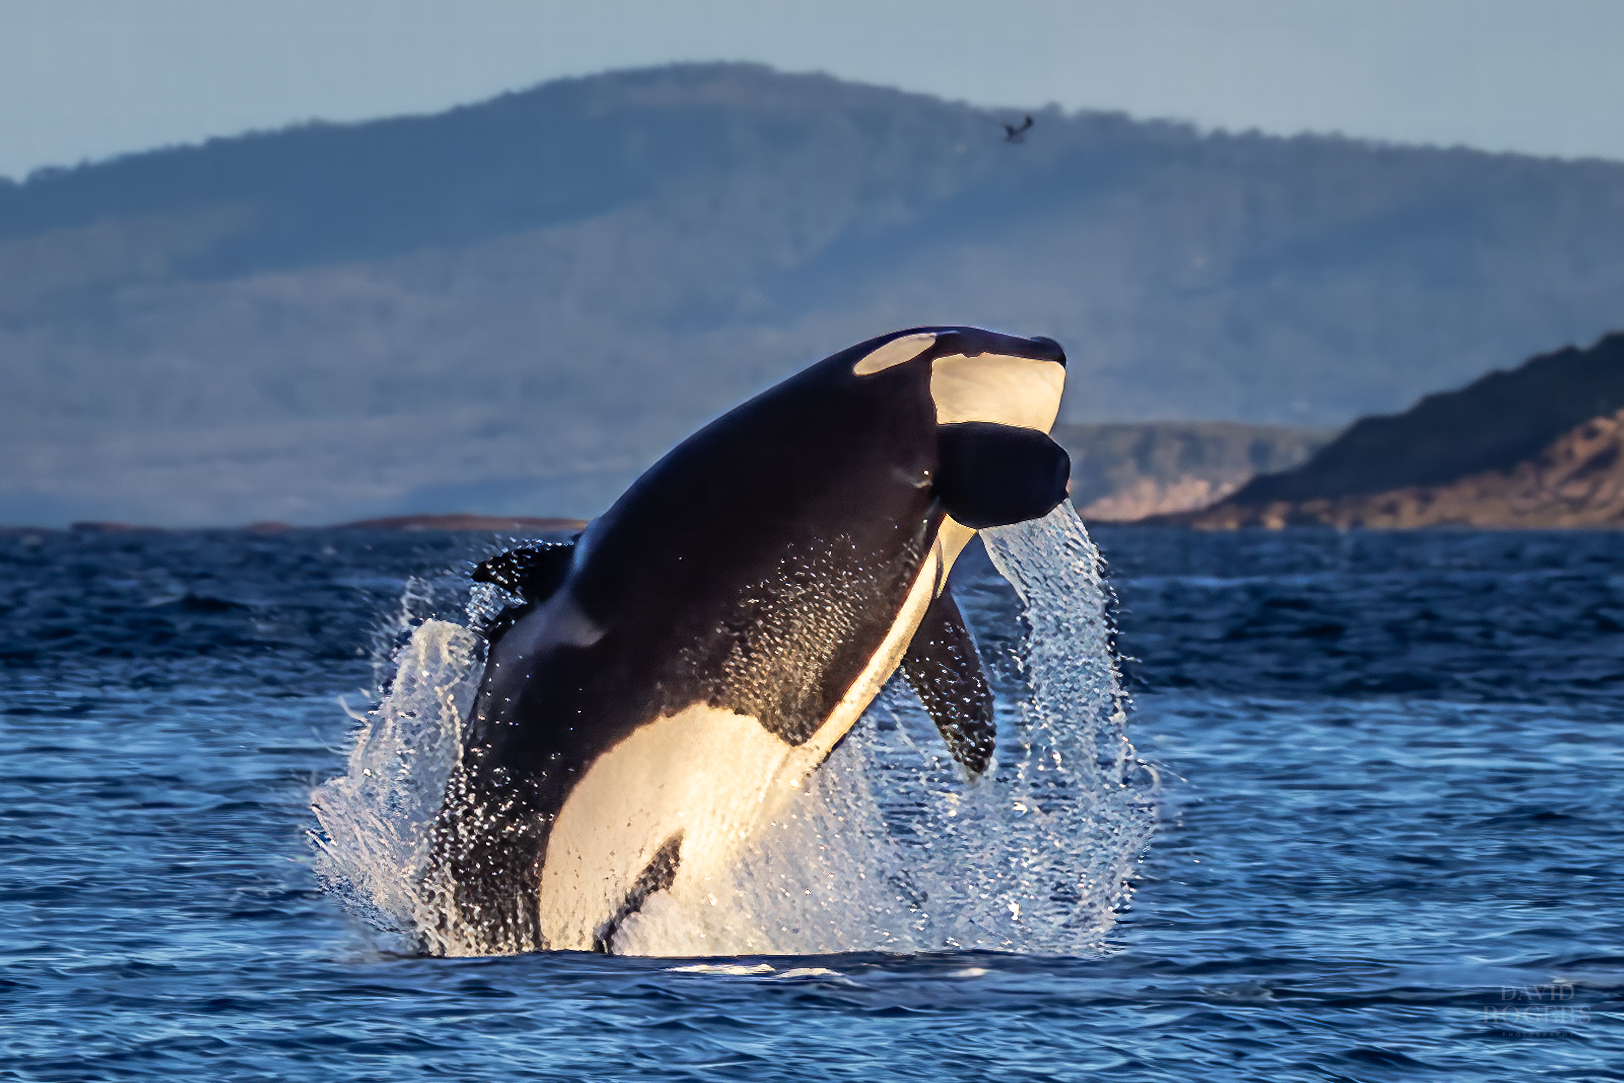 Killer whales sighted off Pambula, Merimbula - Power FM Bega Bay